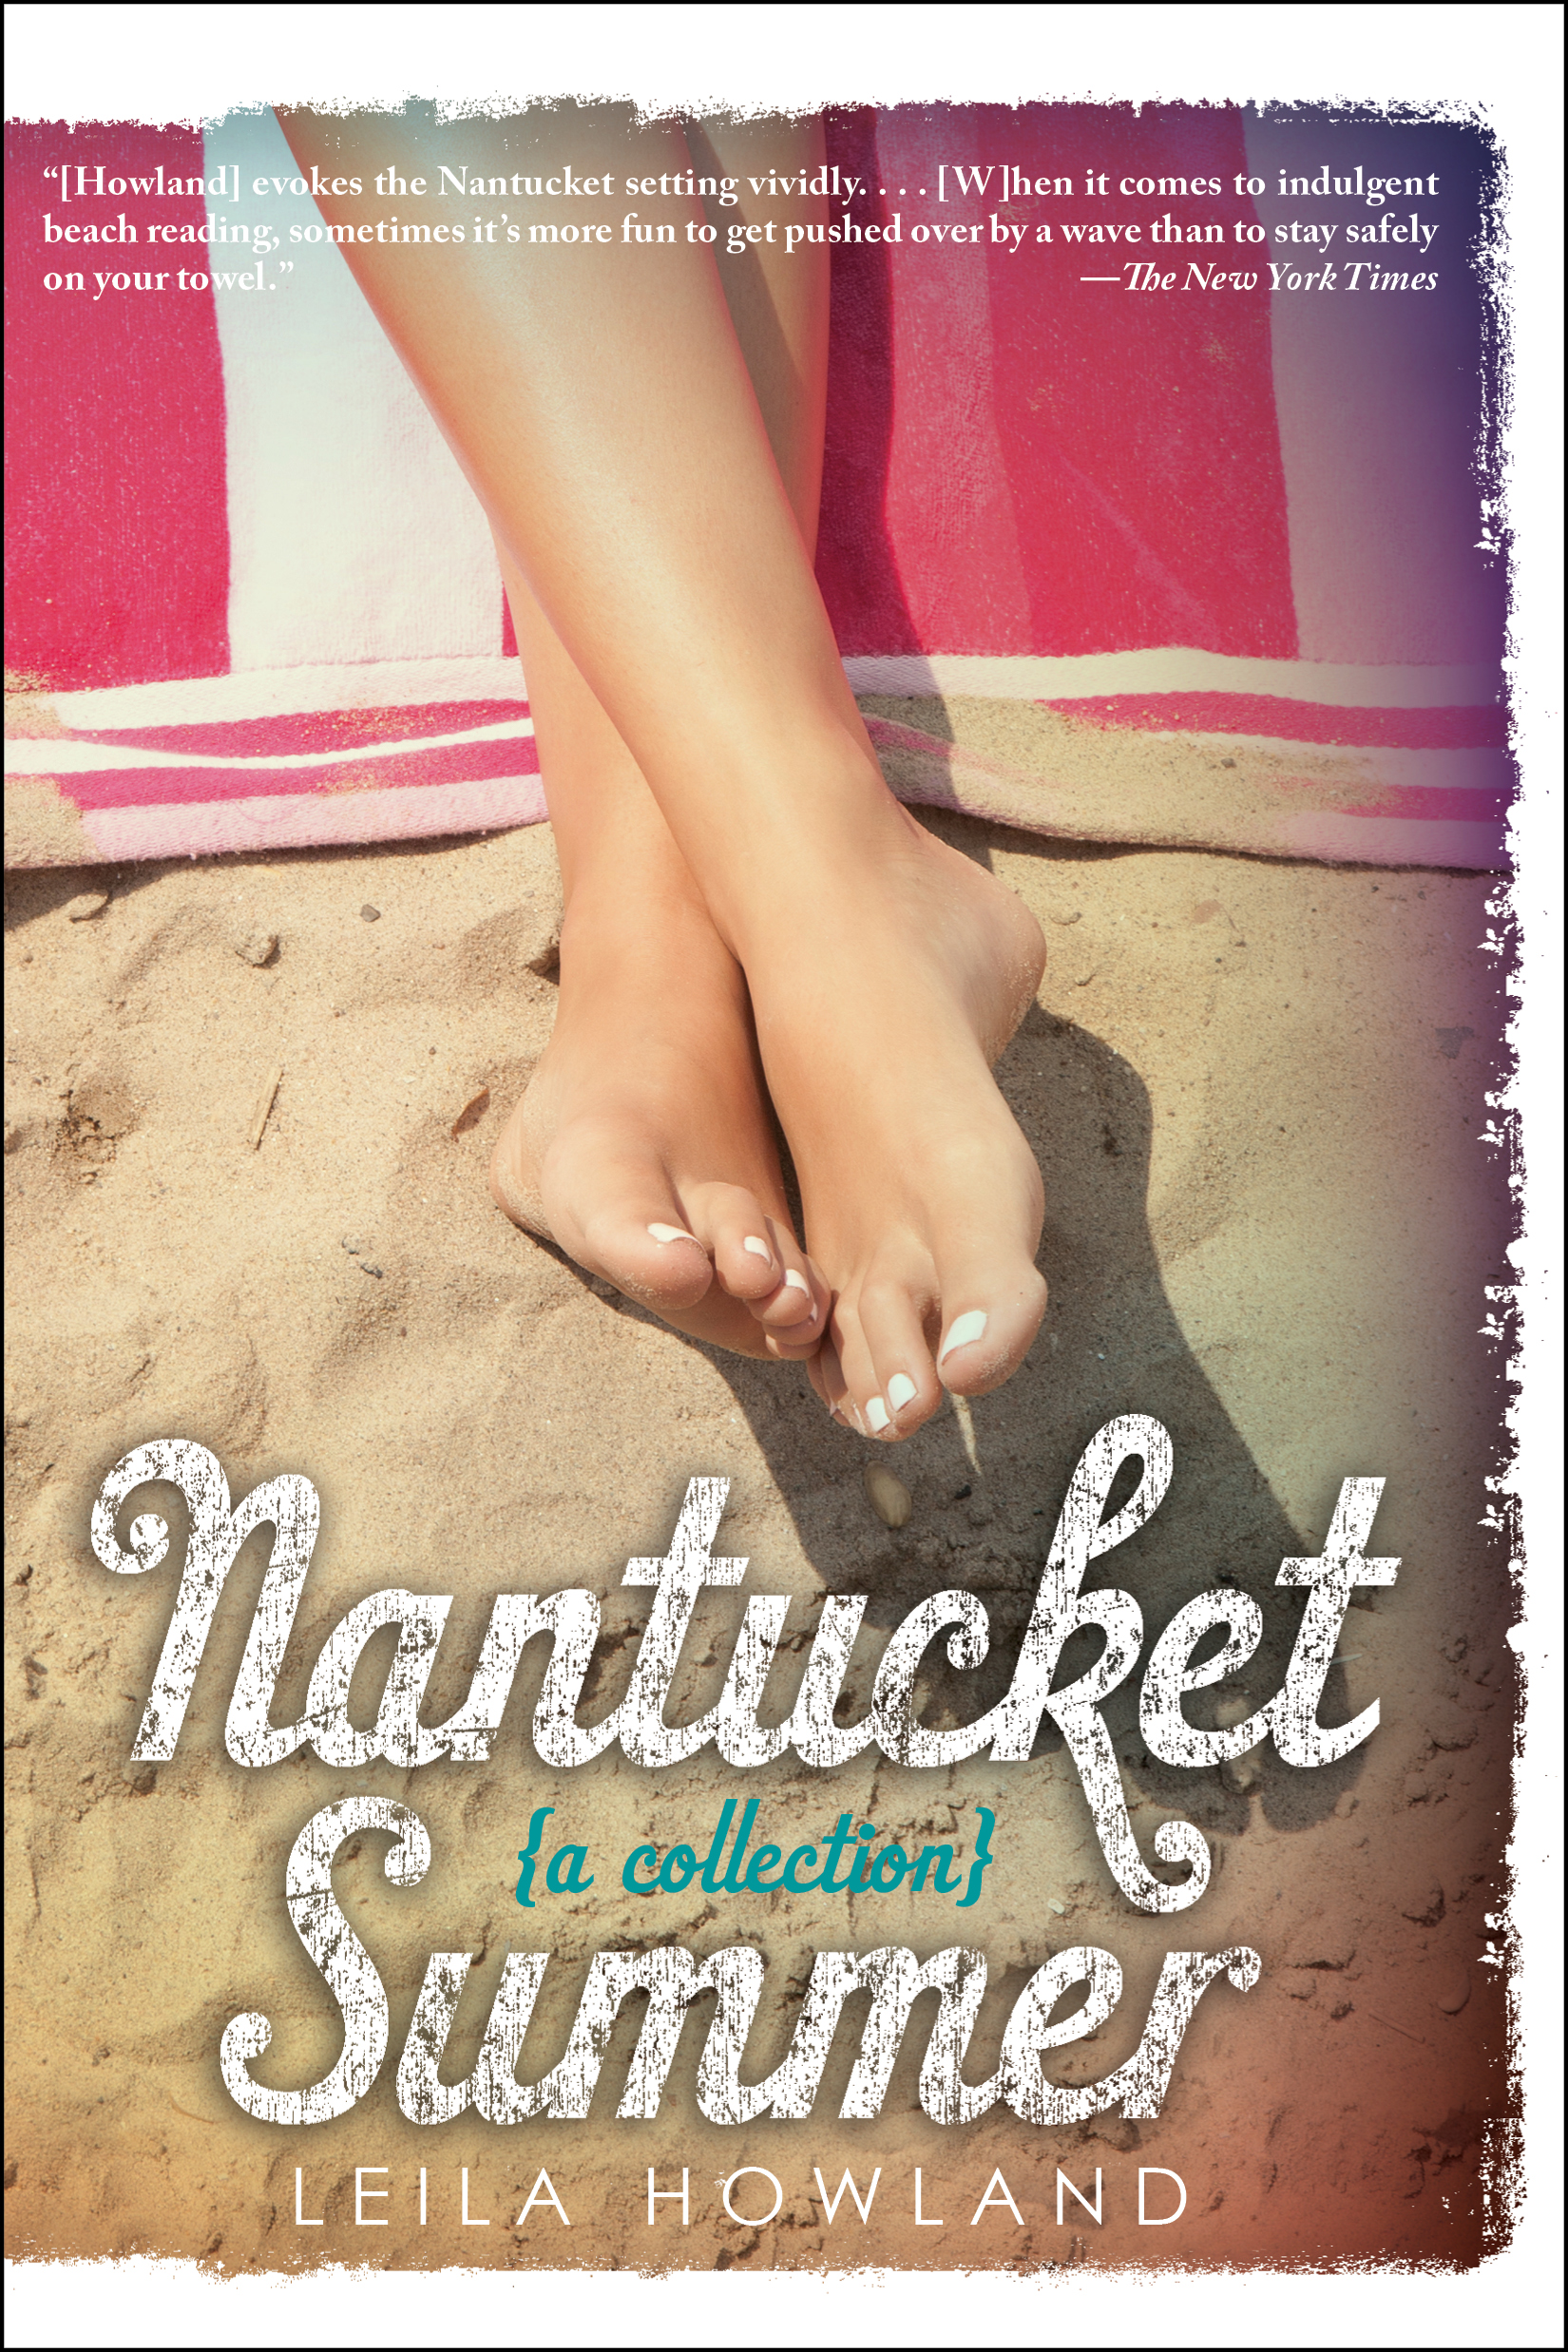 Nantucket Summer Nantucket Blue and Nantucket Red bind-up by Leila Howland Hachette Book Group